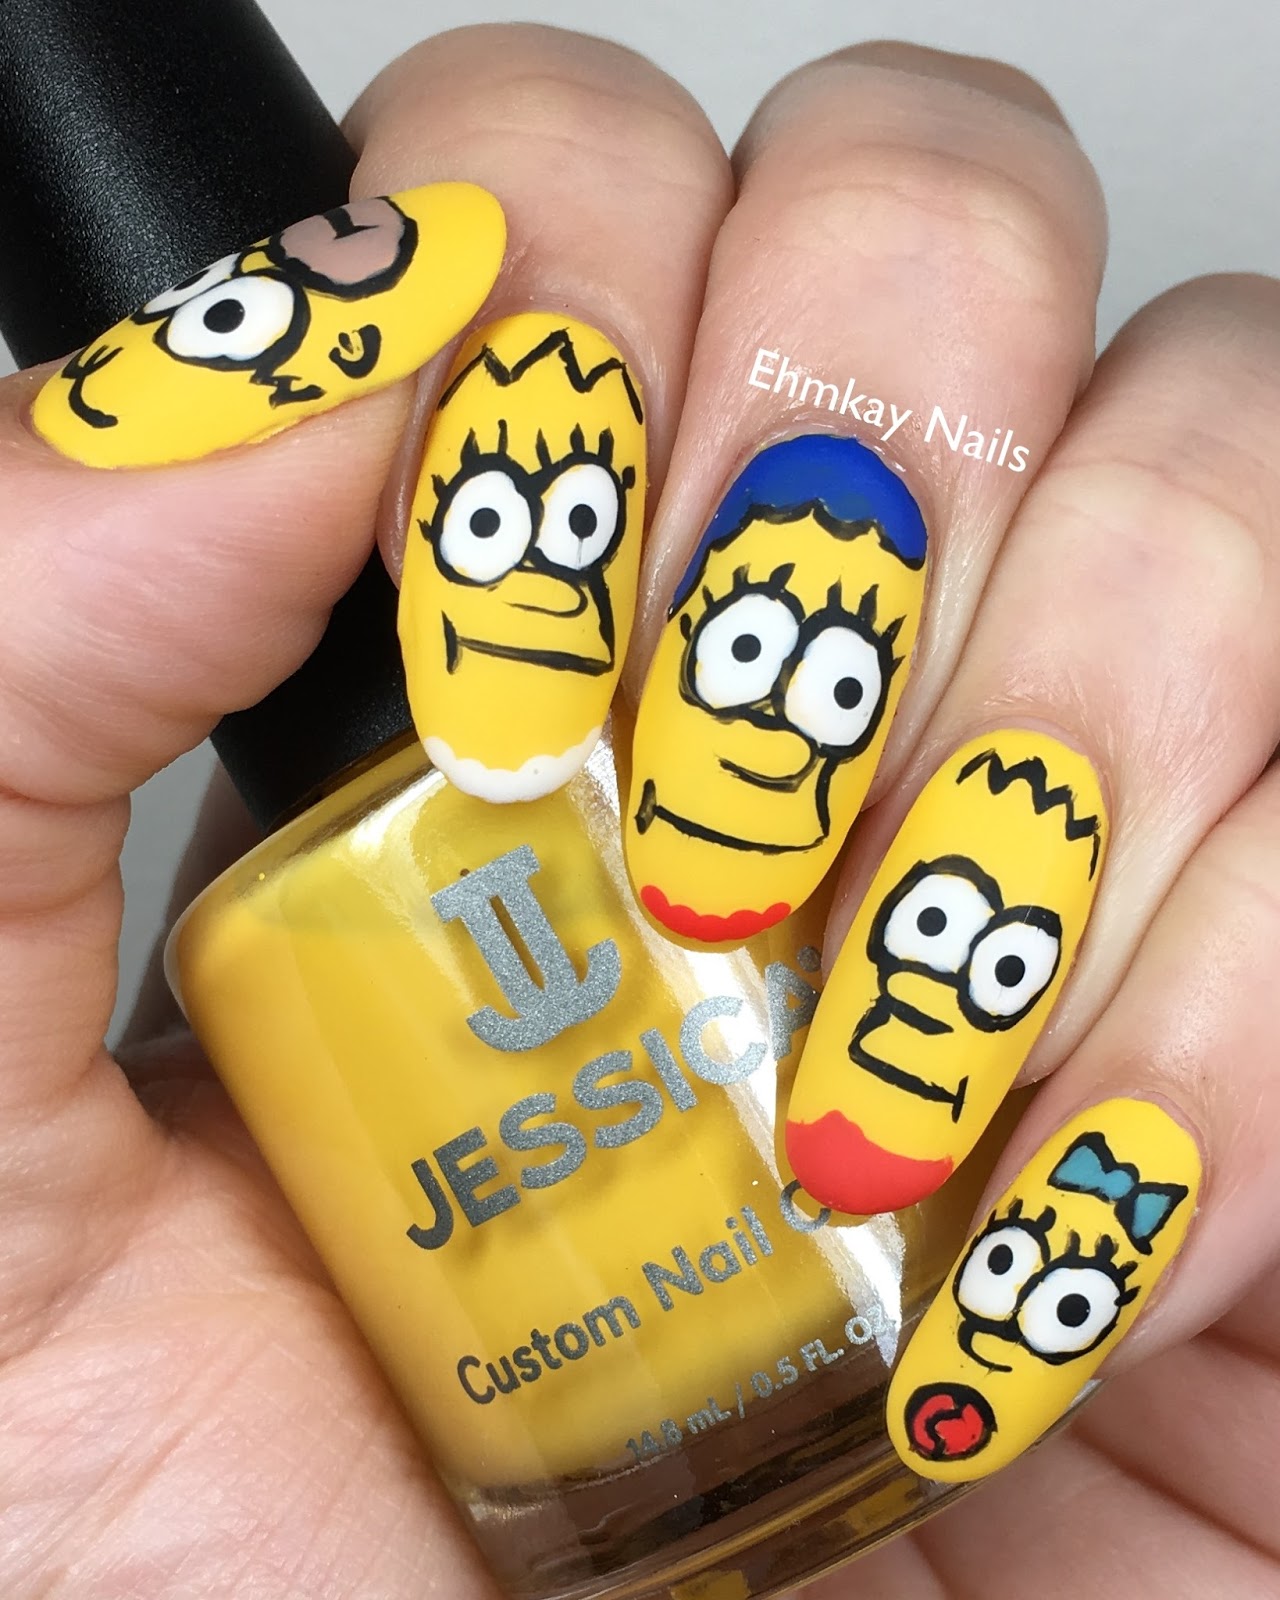 ehmkay nails: The Simpsons Nail Art